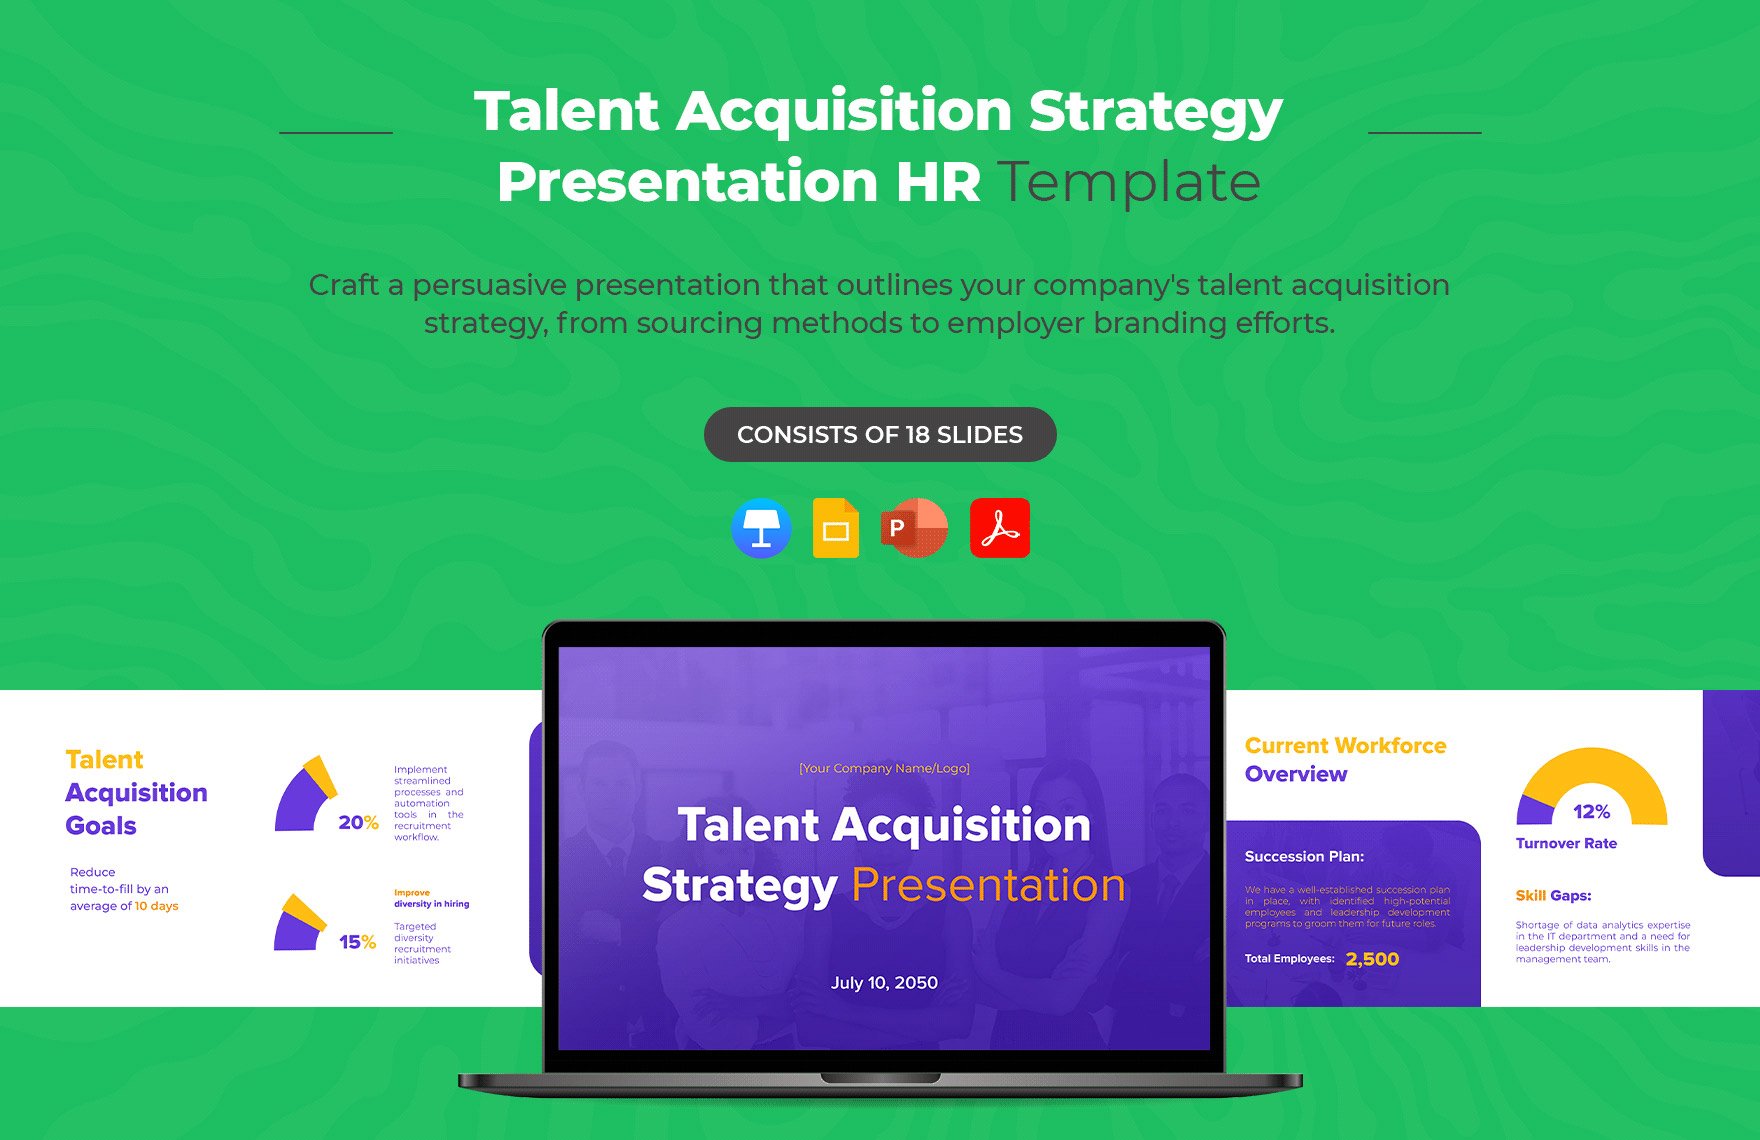 Talent Acquisition Strategy Presentation HR Template